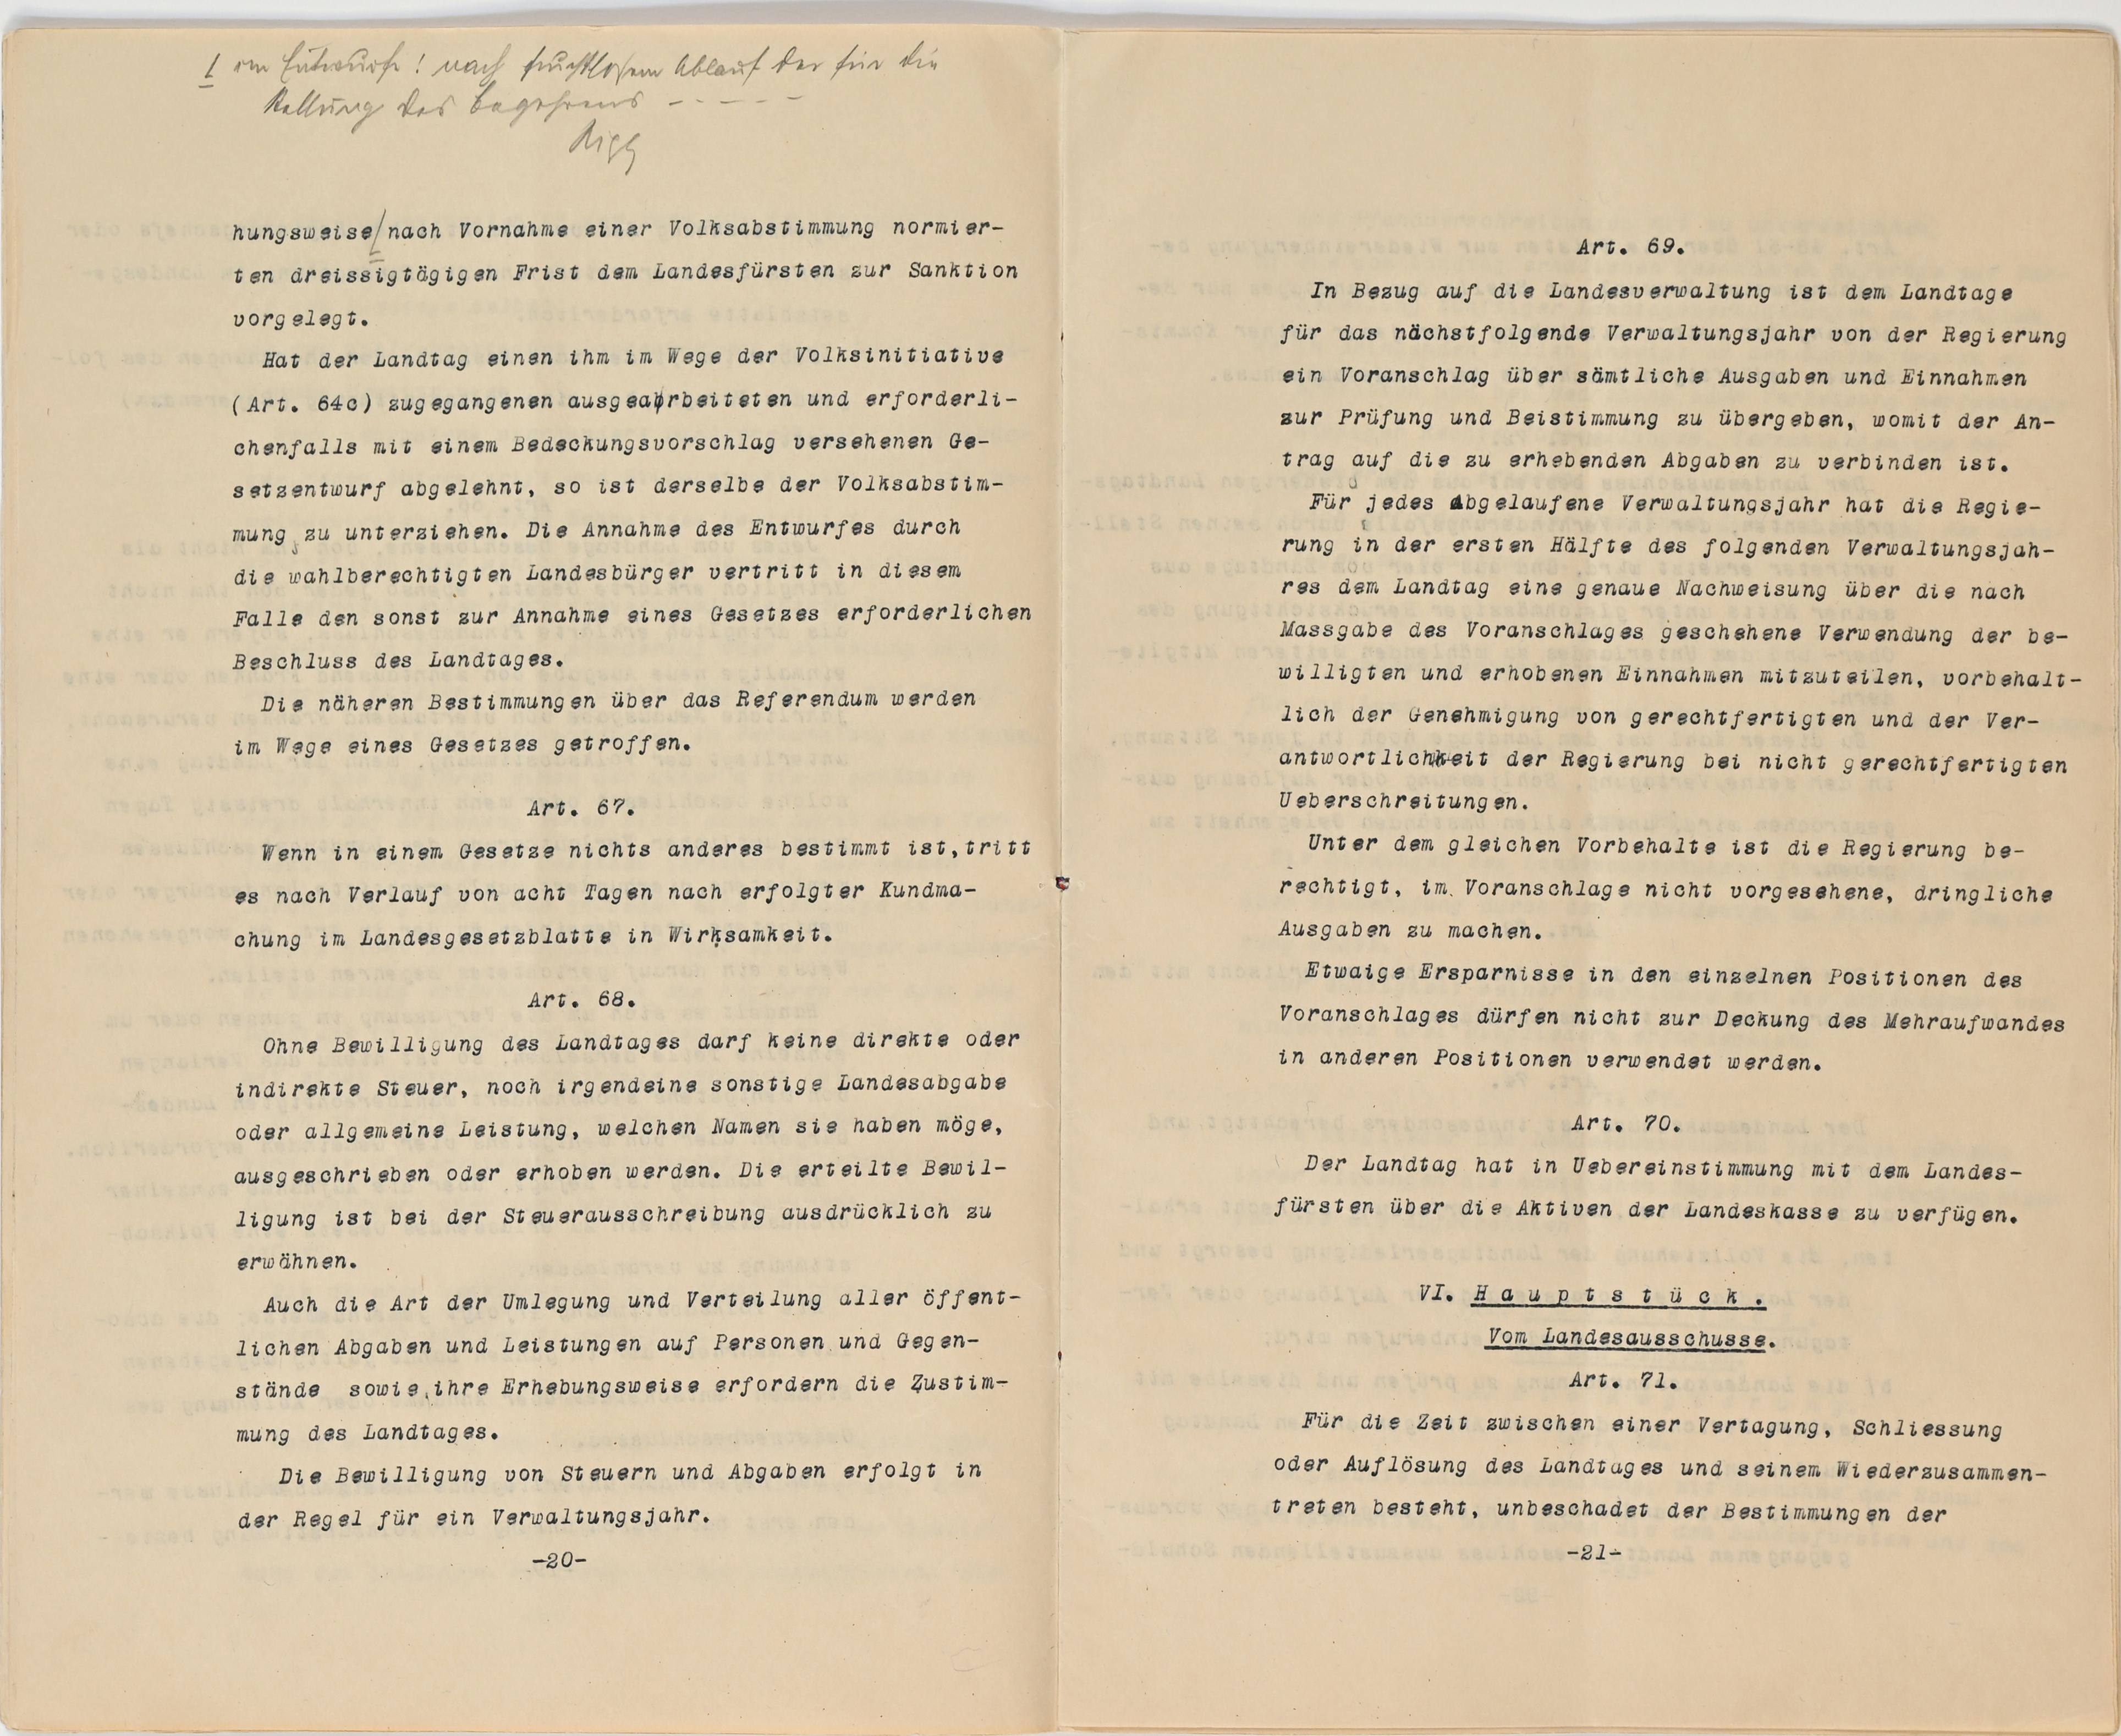 Verfassung 1921 Art. 67 bis Art. 71